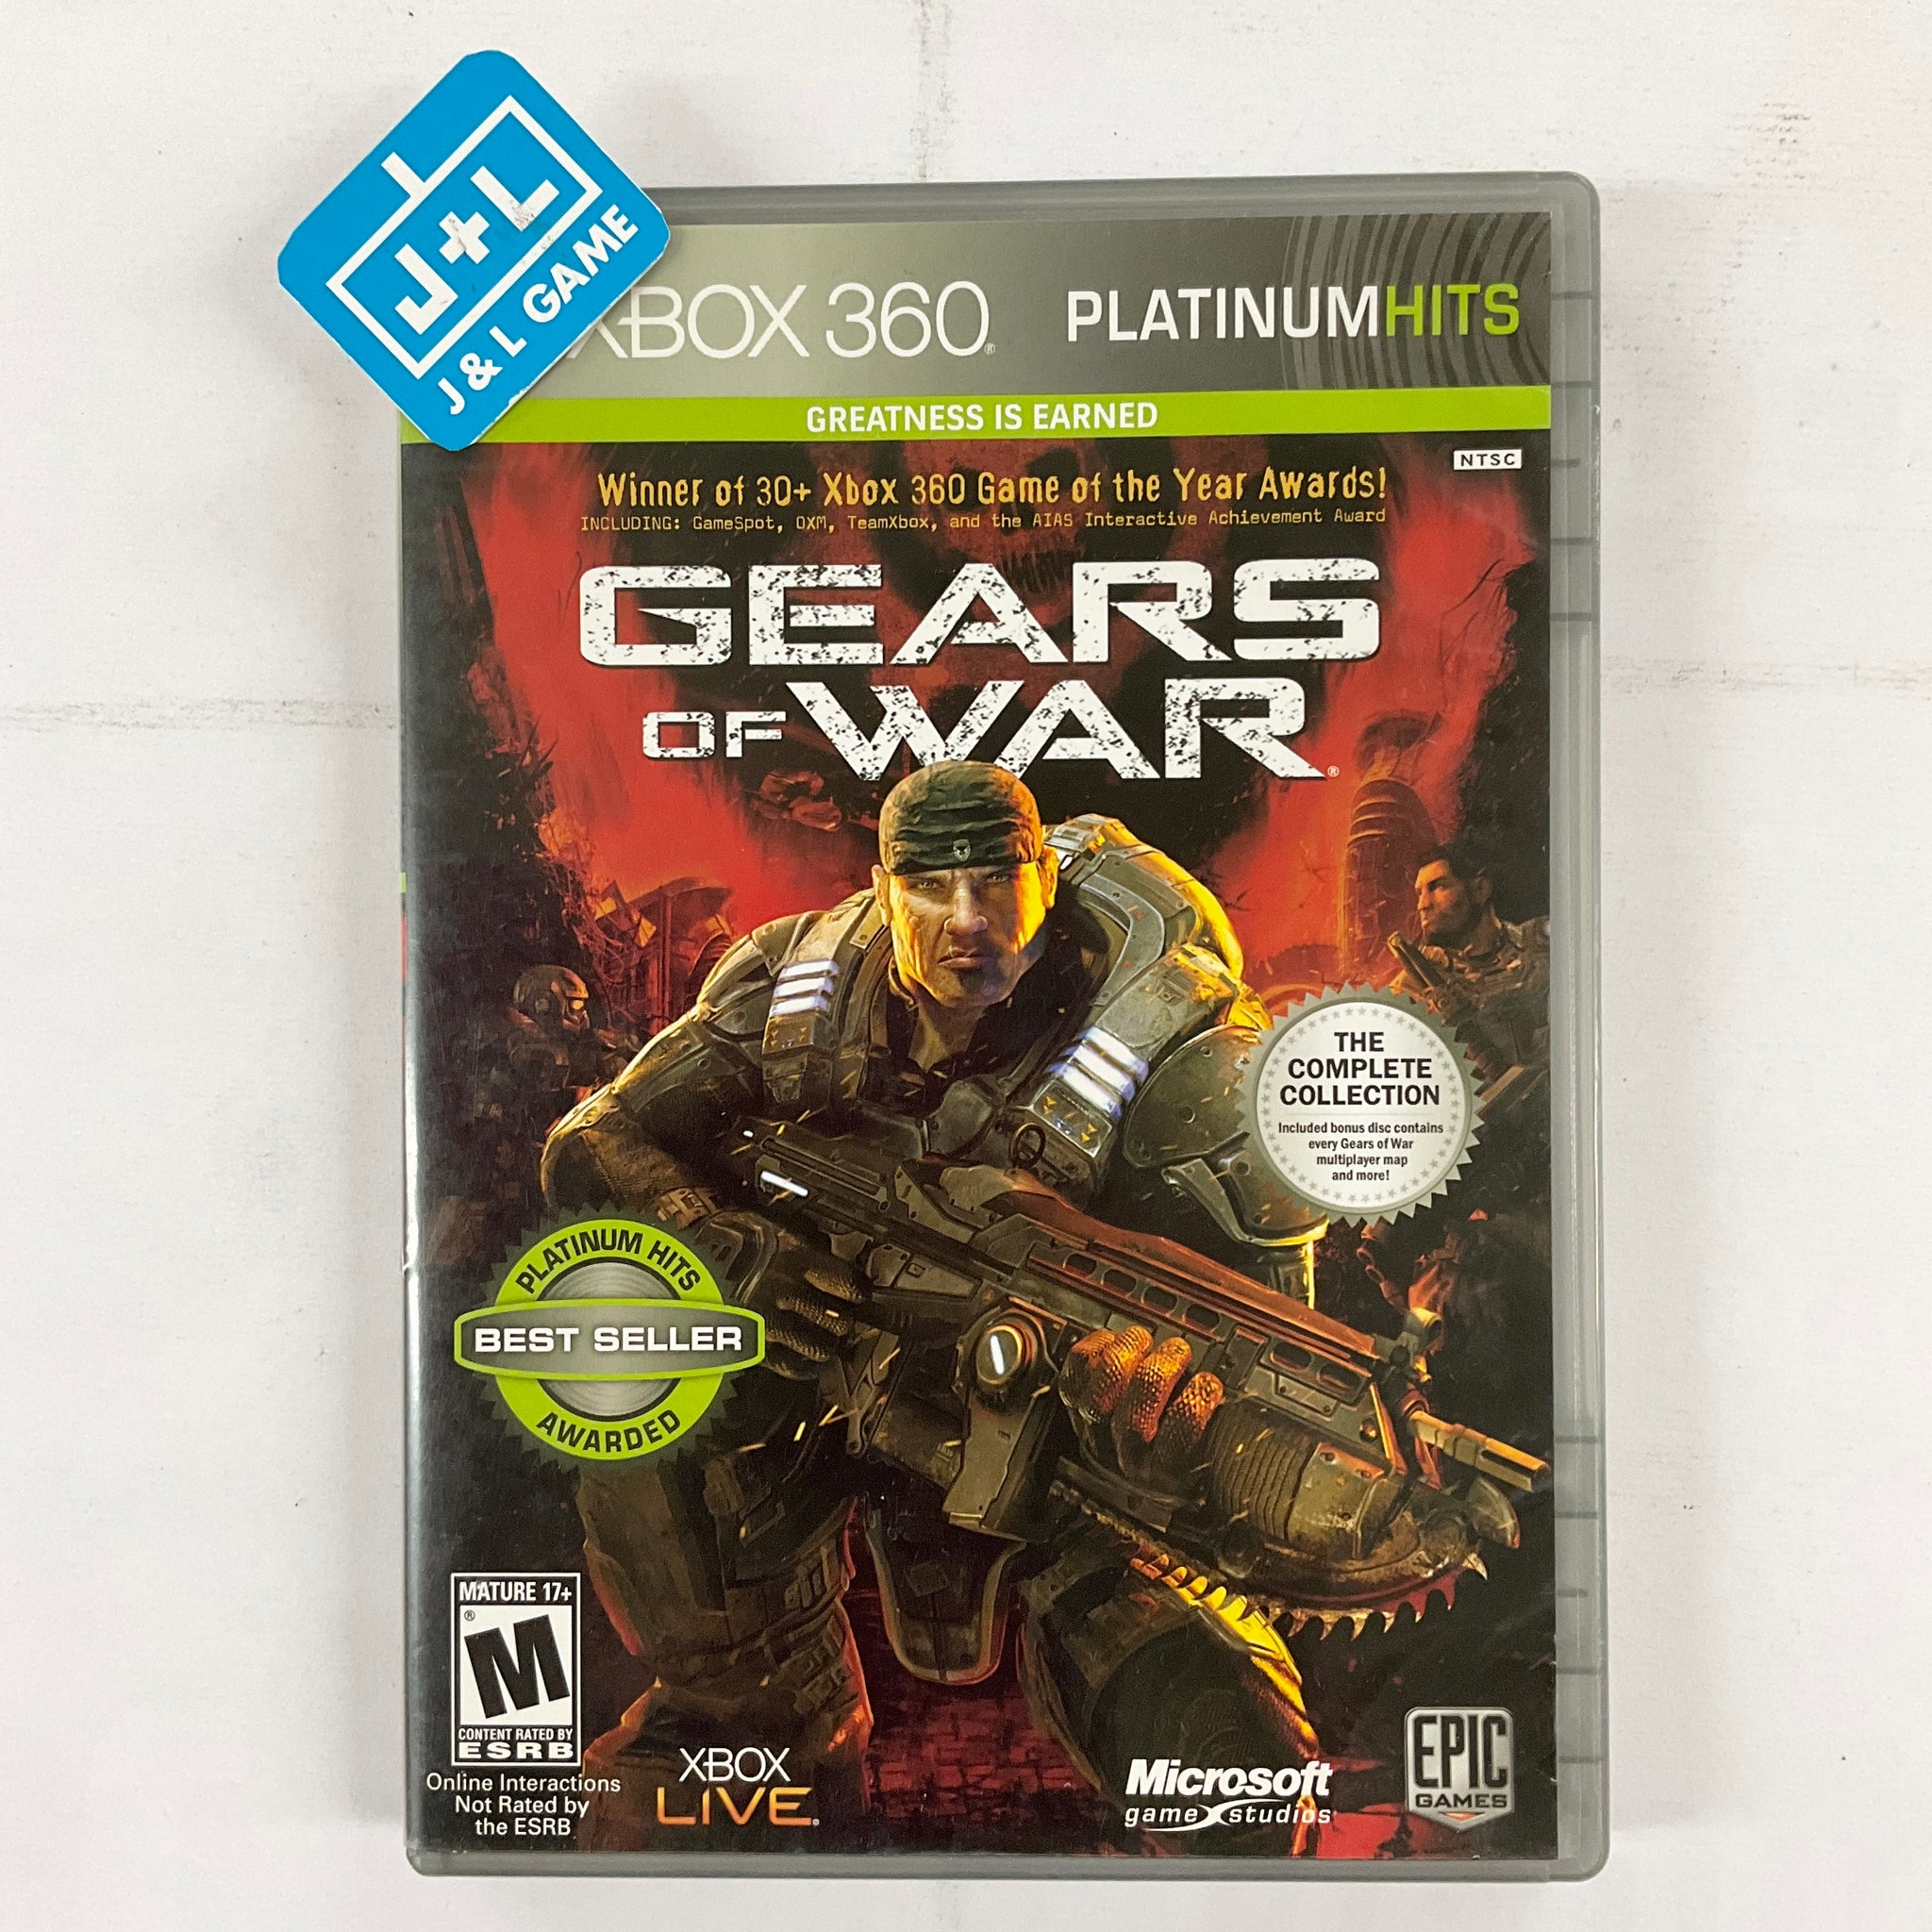 Gears of War 2 - Xbox 360, Xbox 360